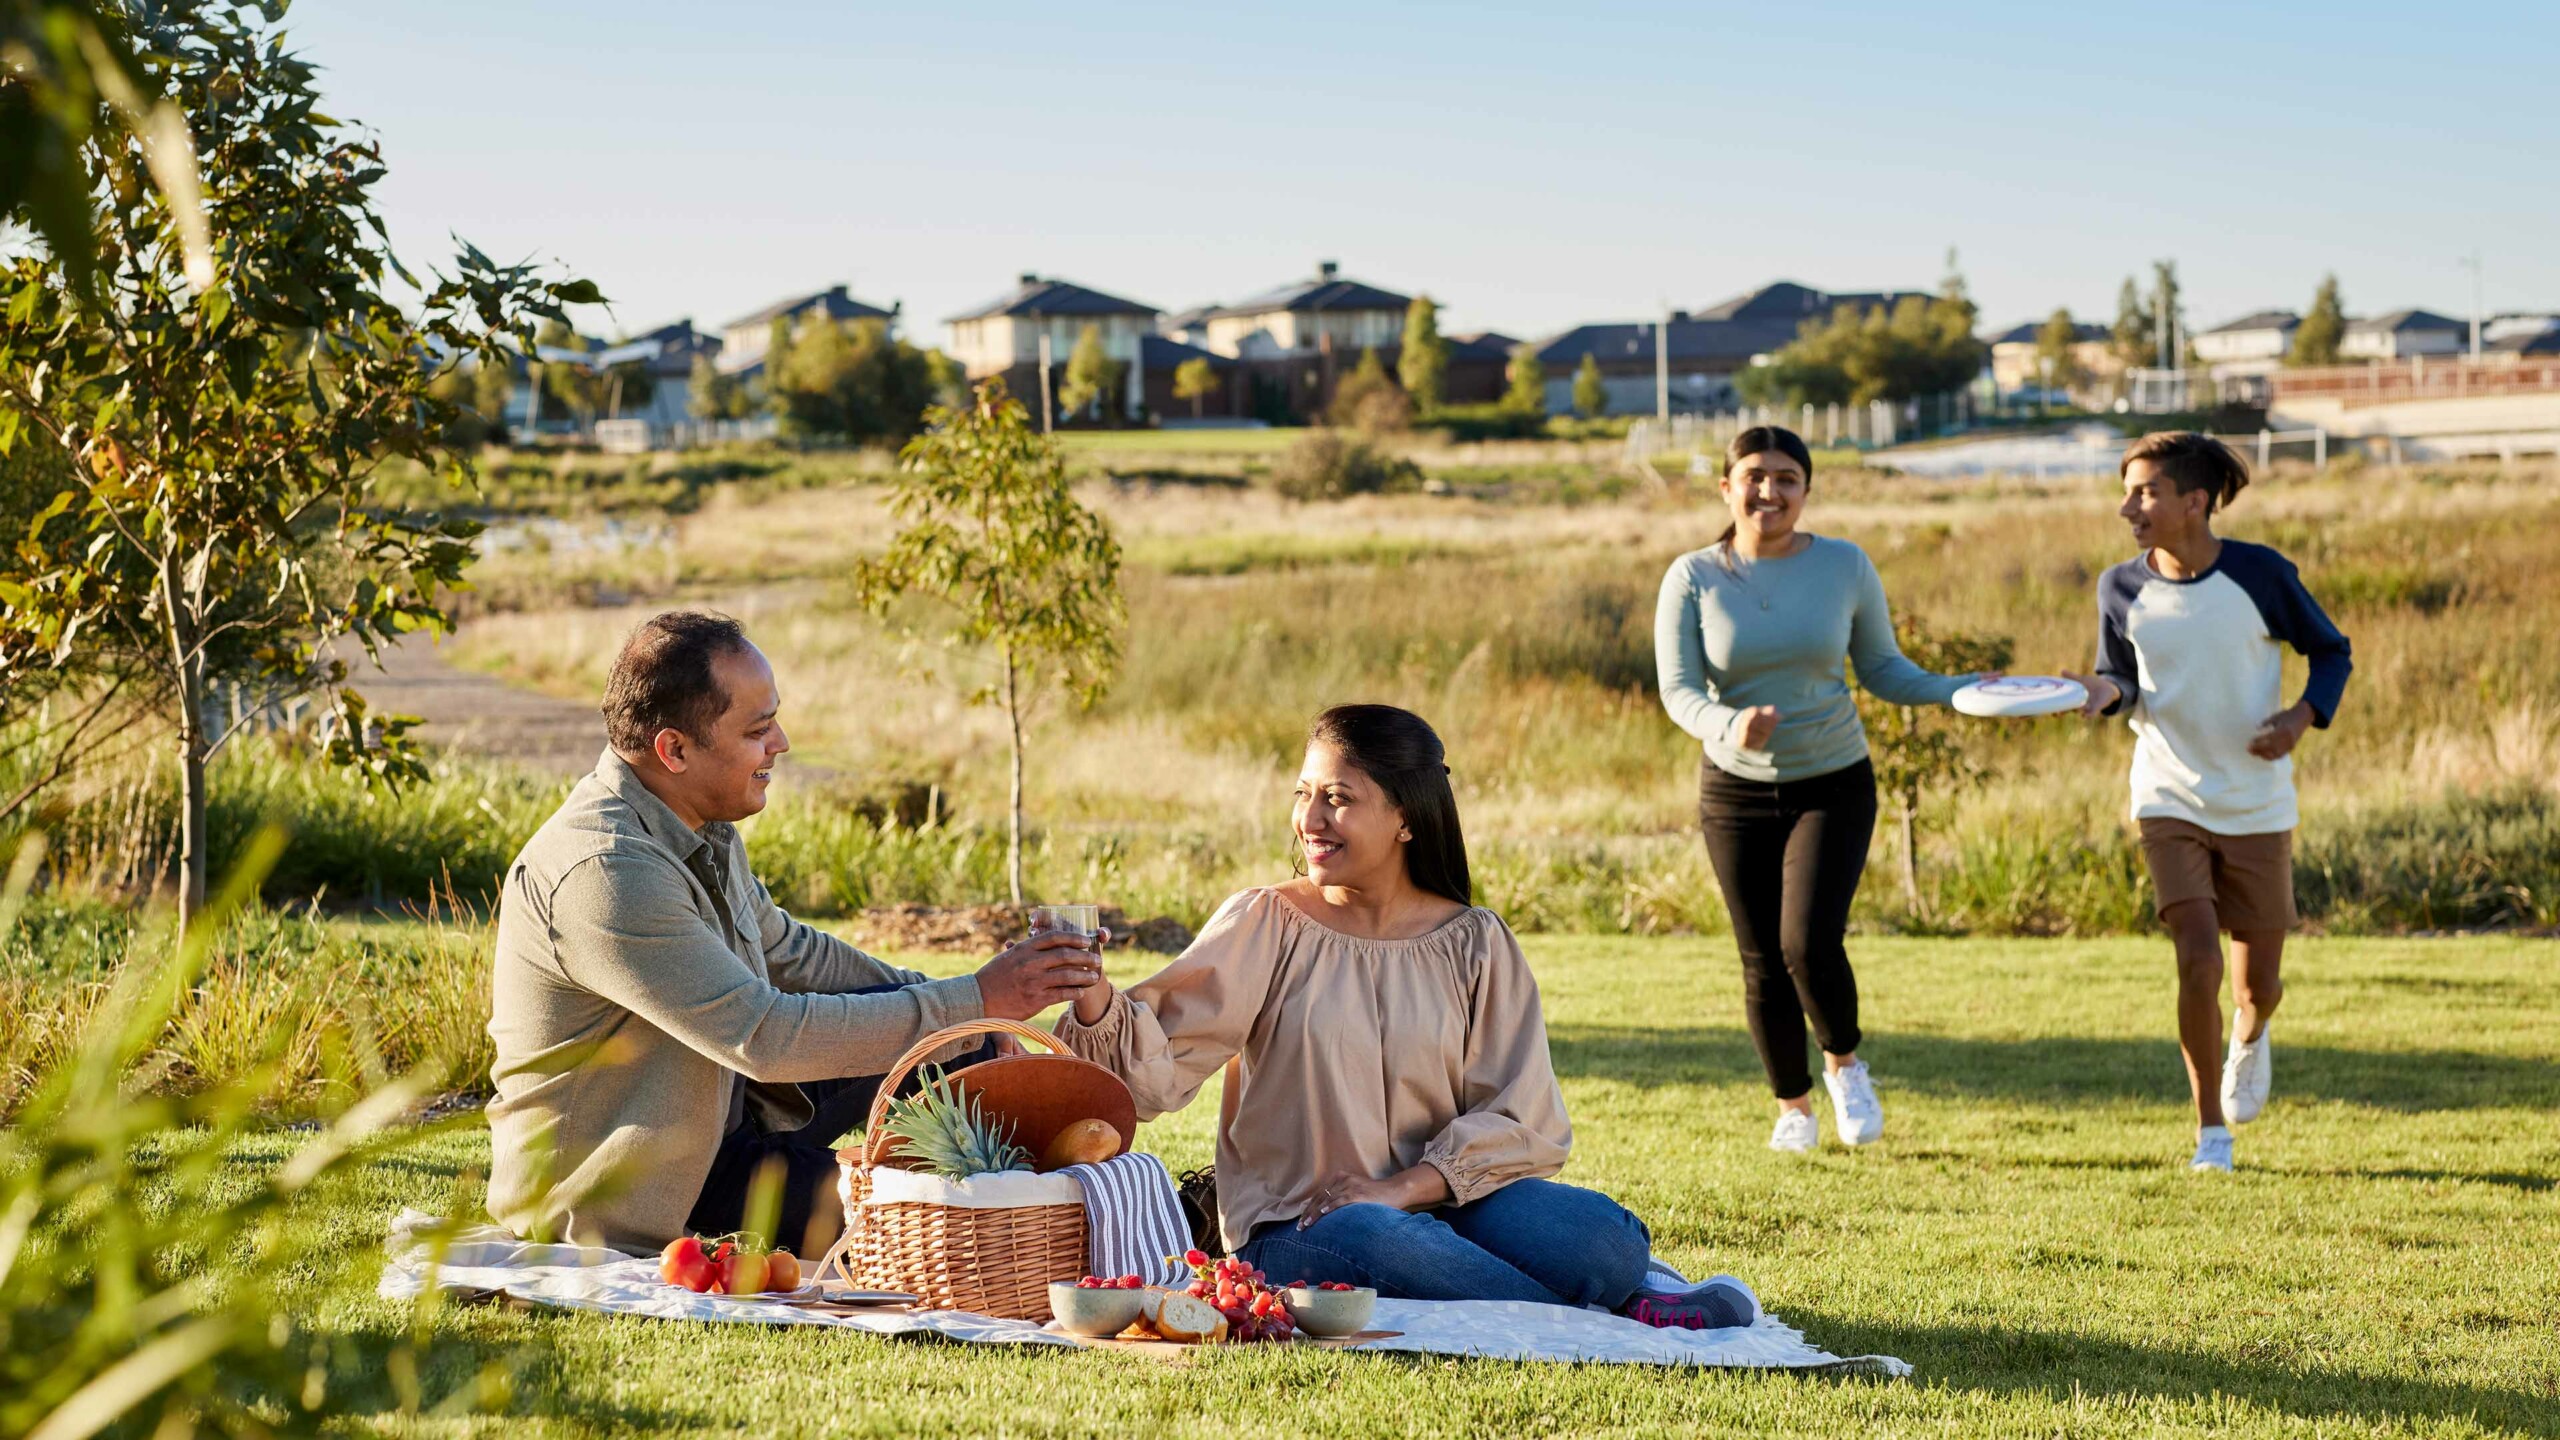 Bluestone, Tarneit family enjoying a picnic.